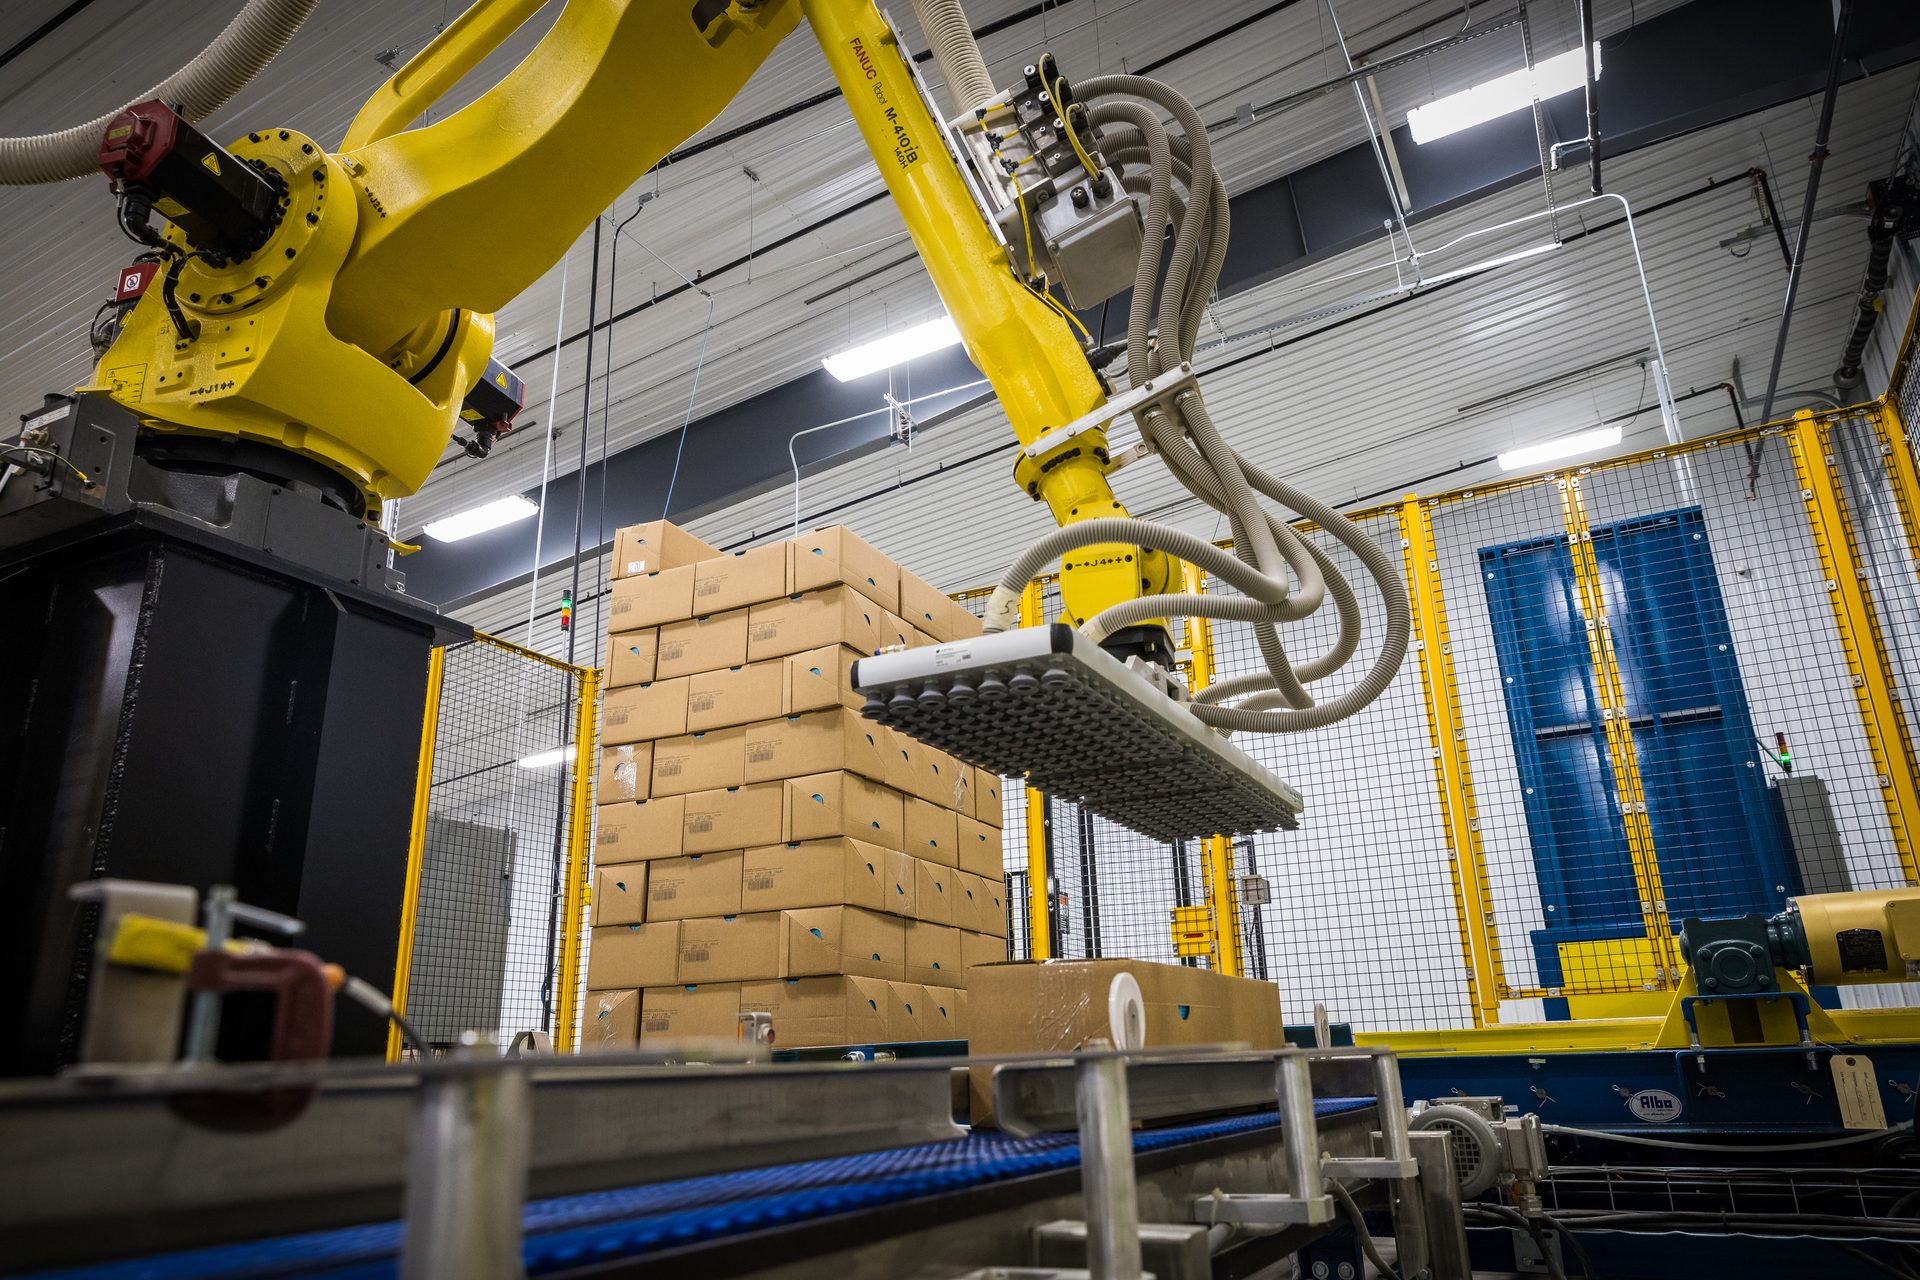 Yellow equipment, Robotic arm, Industrial interior